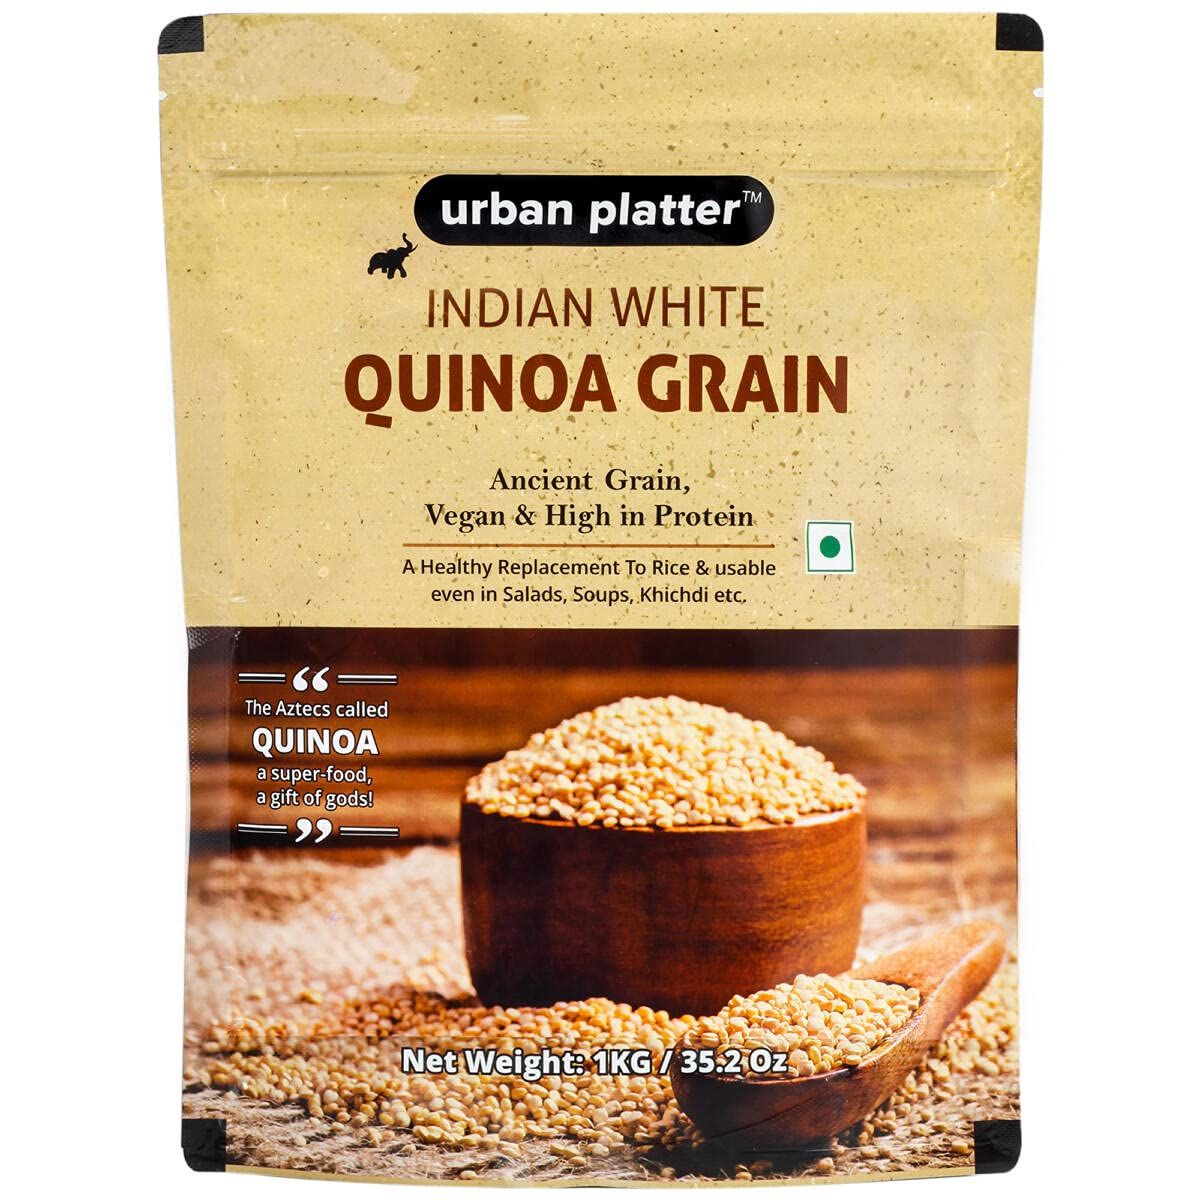 Urban PLatter Whole White Indian Quinoa Grain Image